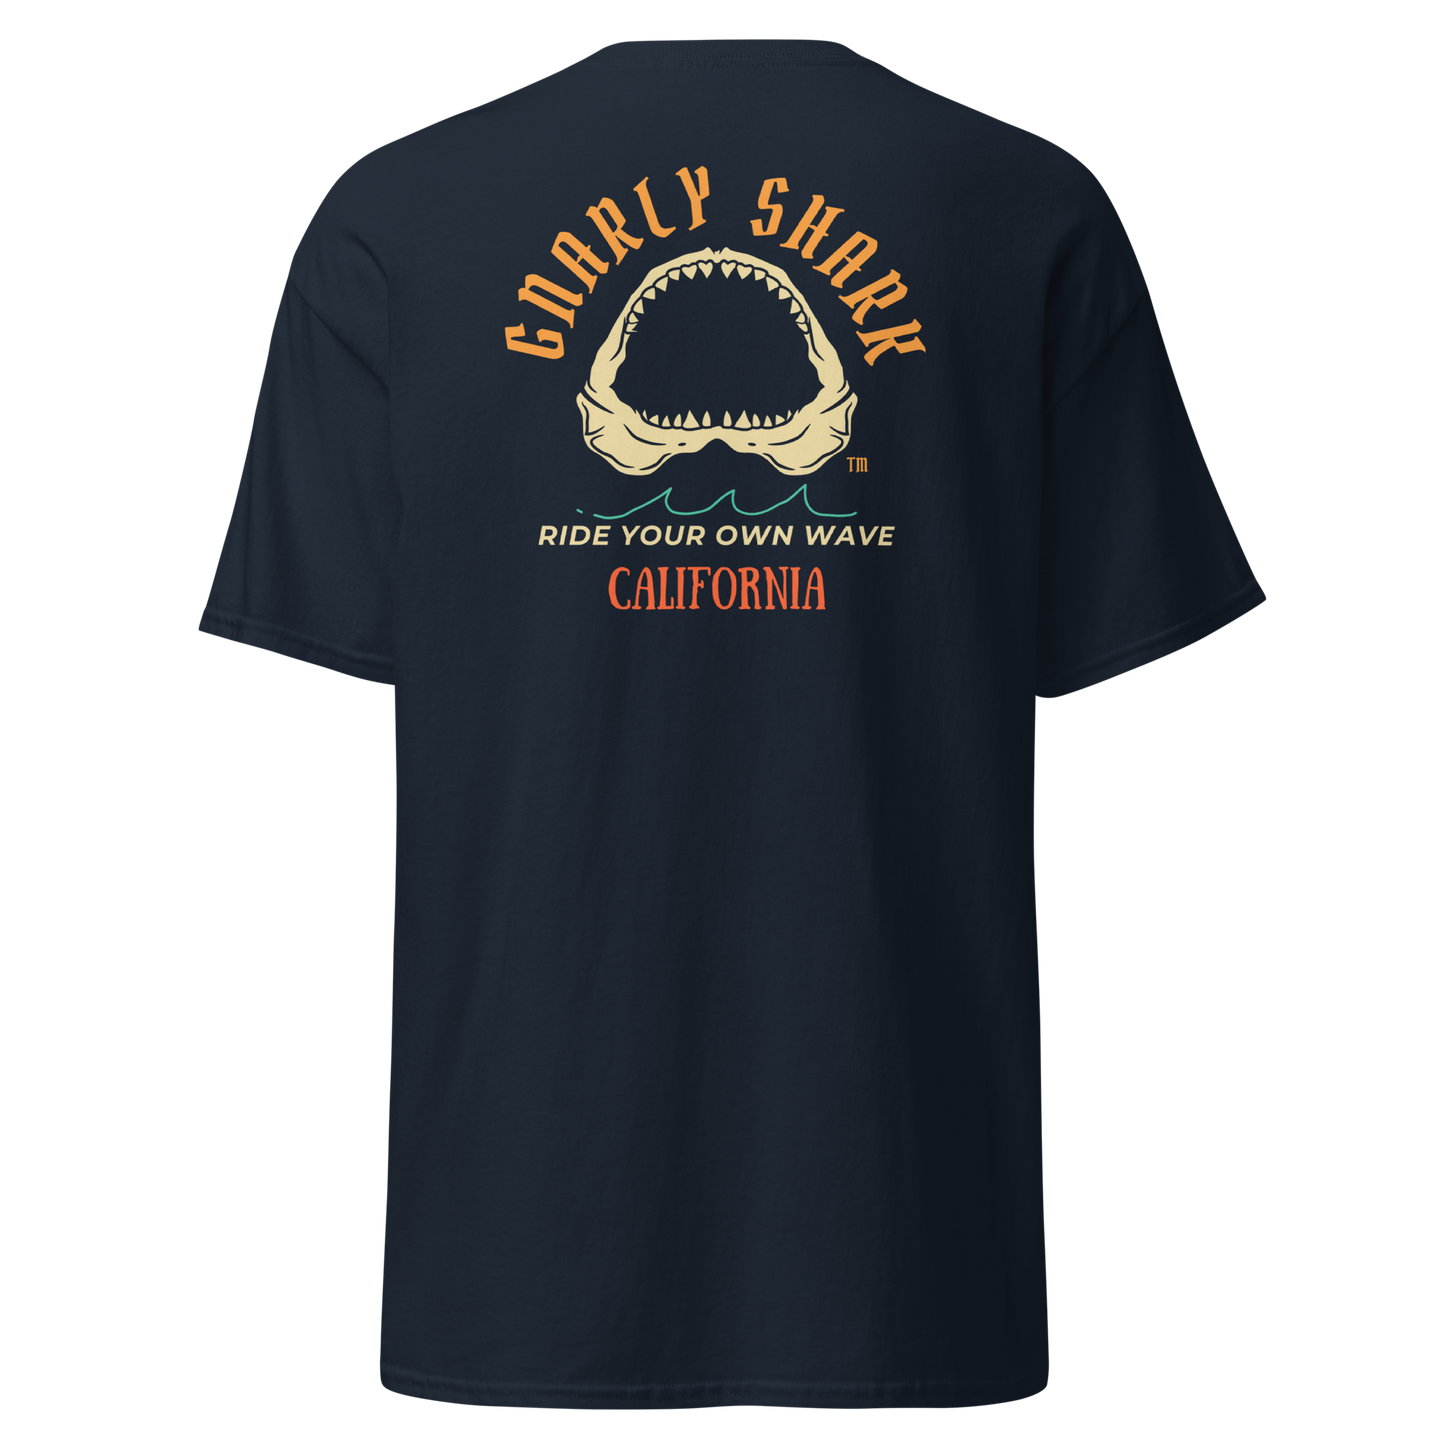 Gnarly Shark California T-Shirt - Front / Back - Gildan classic 5000